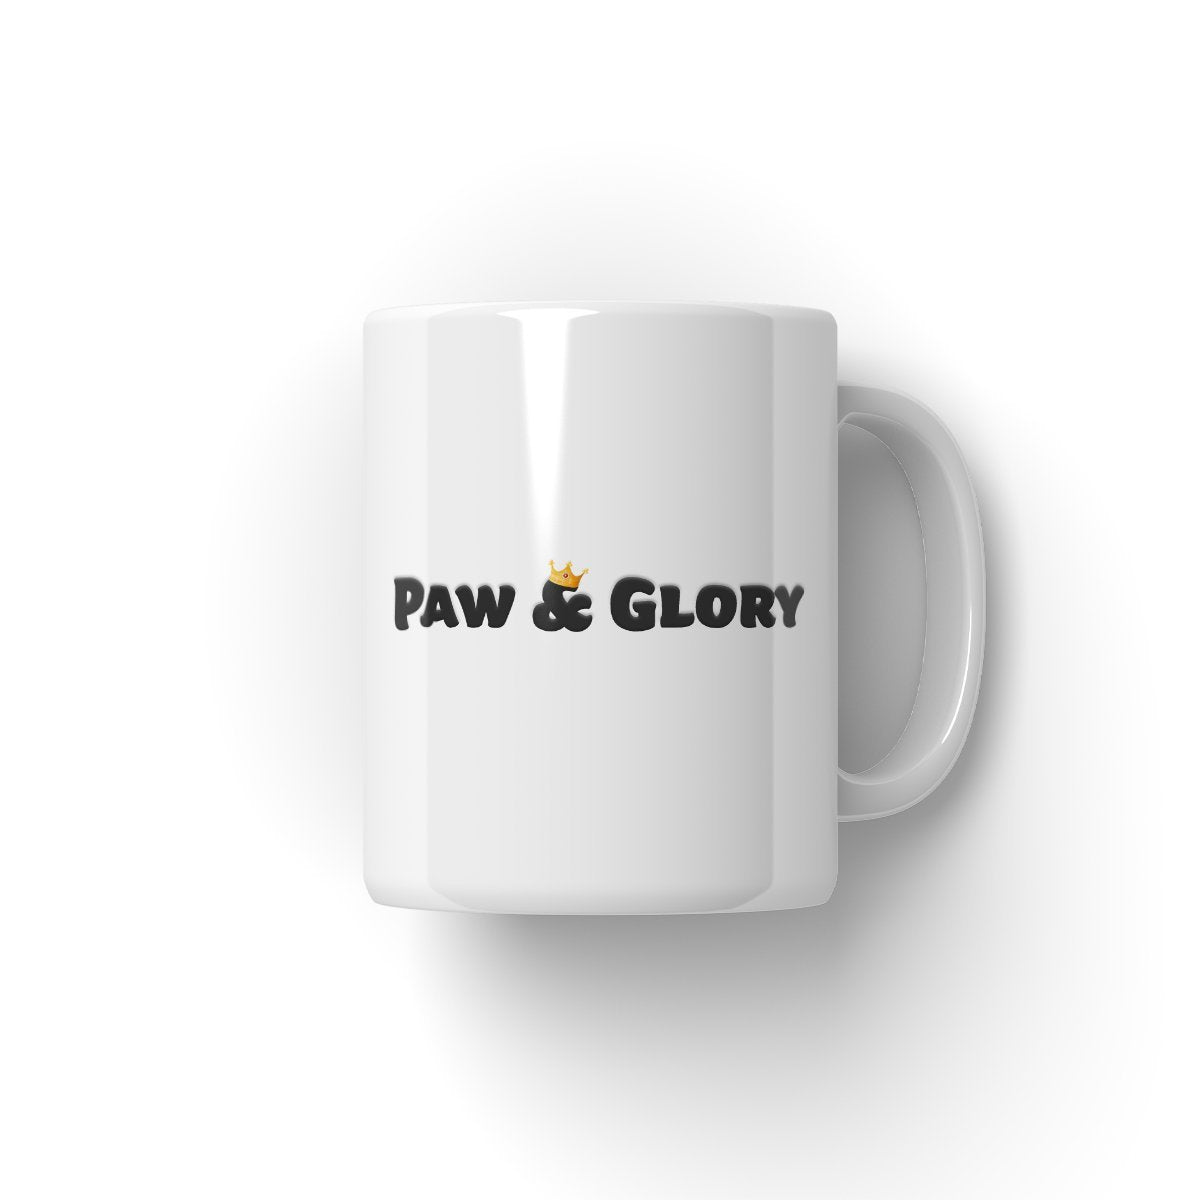 Liverpawl Football Club Paw & Glory, paw and glory, personalised coffee mug with dogs, custom dog mug, custom pet mug, mug with dog picture, dog mugs personalised, personalized dog and owner mug, Pet Portraits Mug